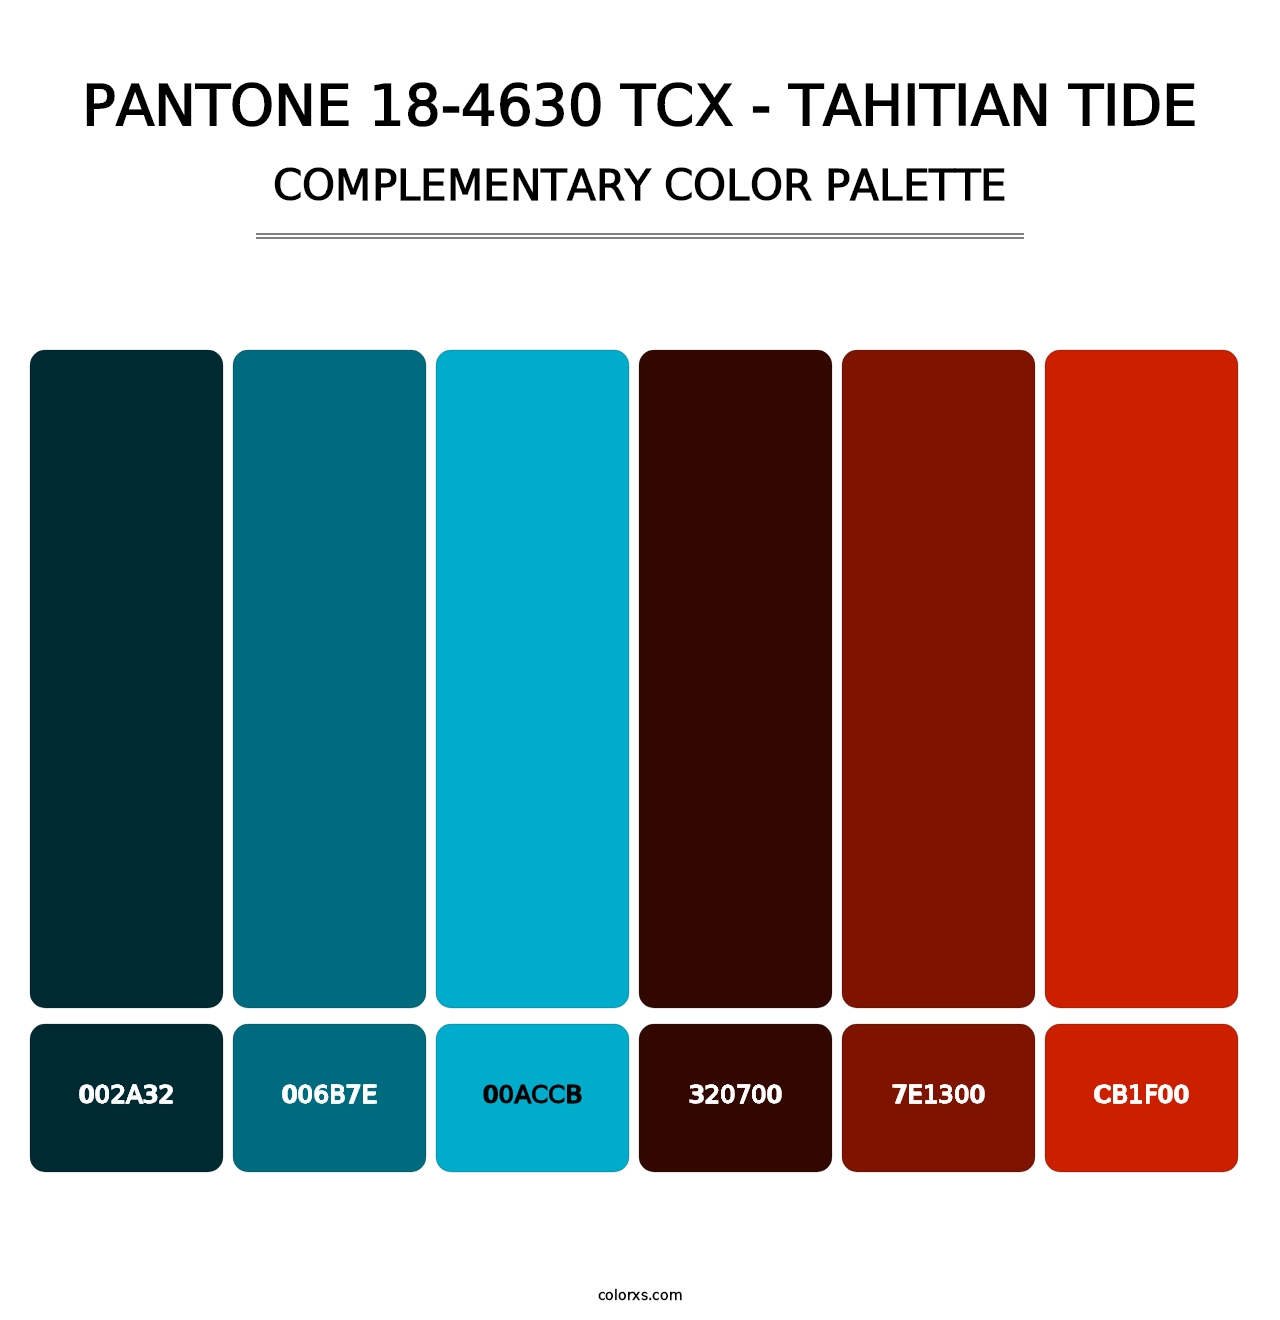 PANTONE 18-4630 TCX - Tahitian Tide - Complementary Color Palette